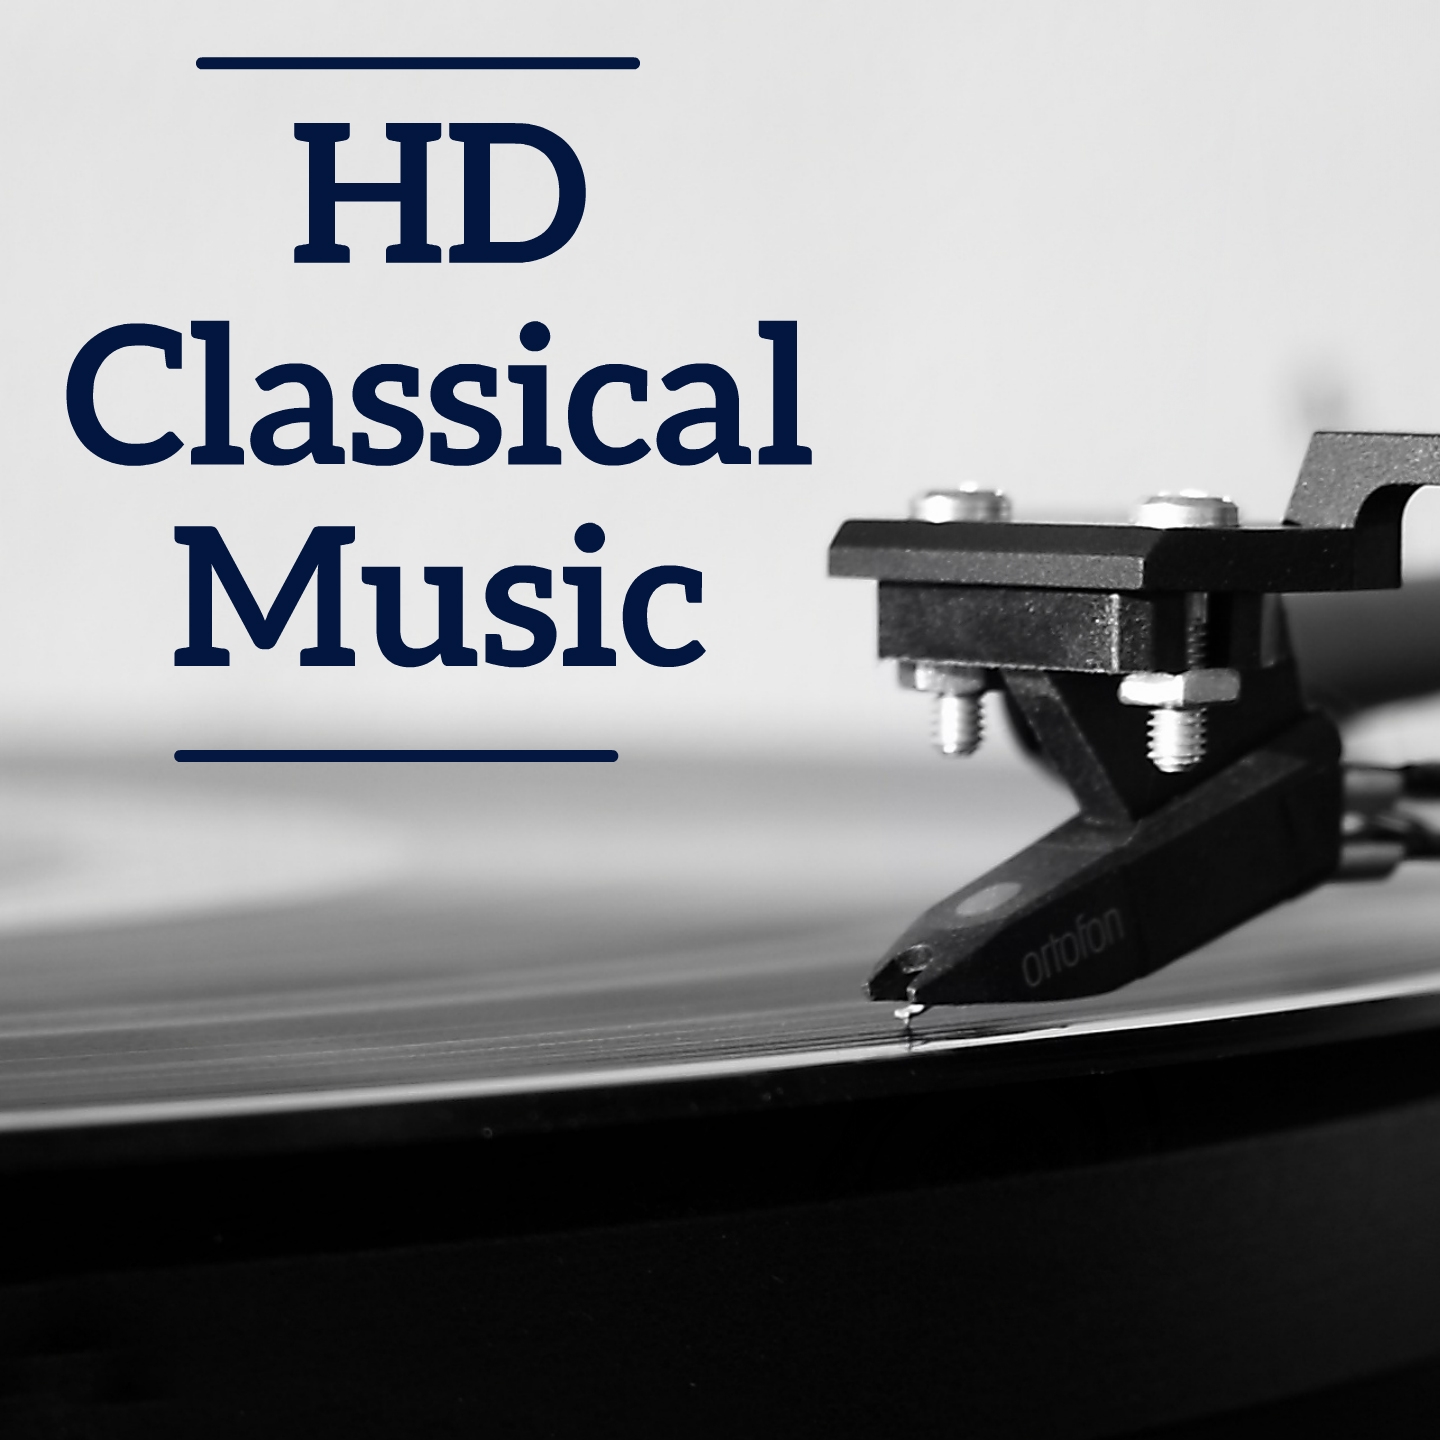 HD Classical Music